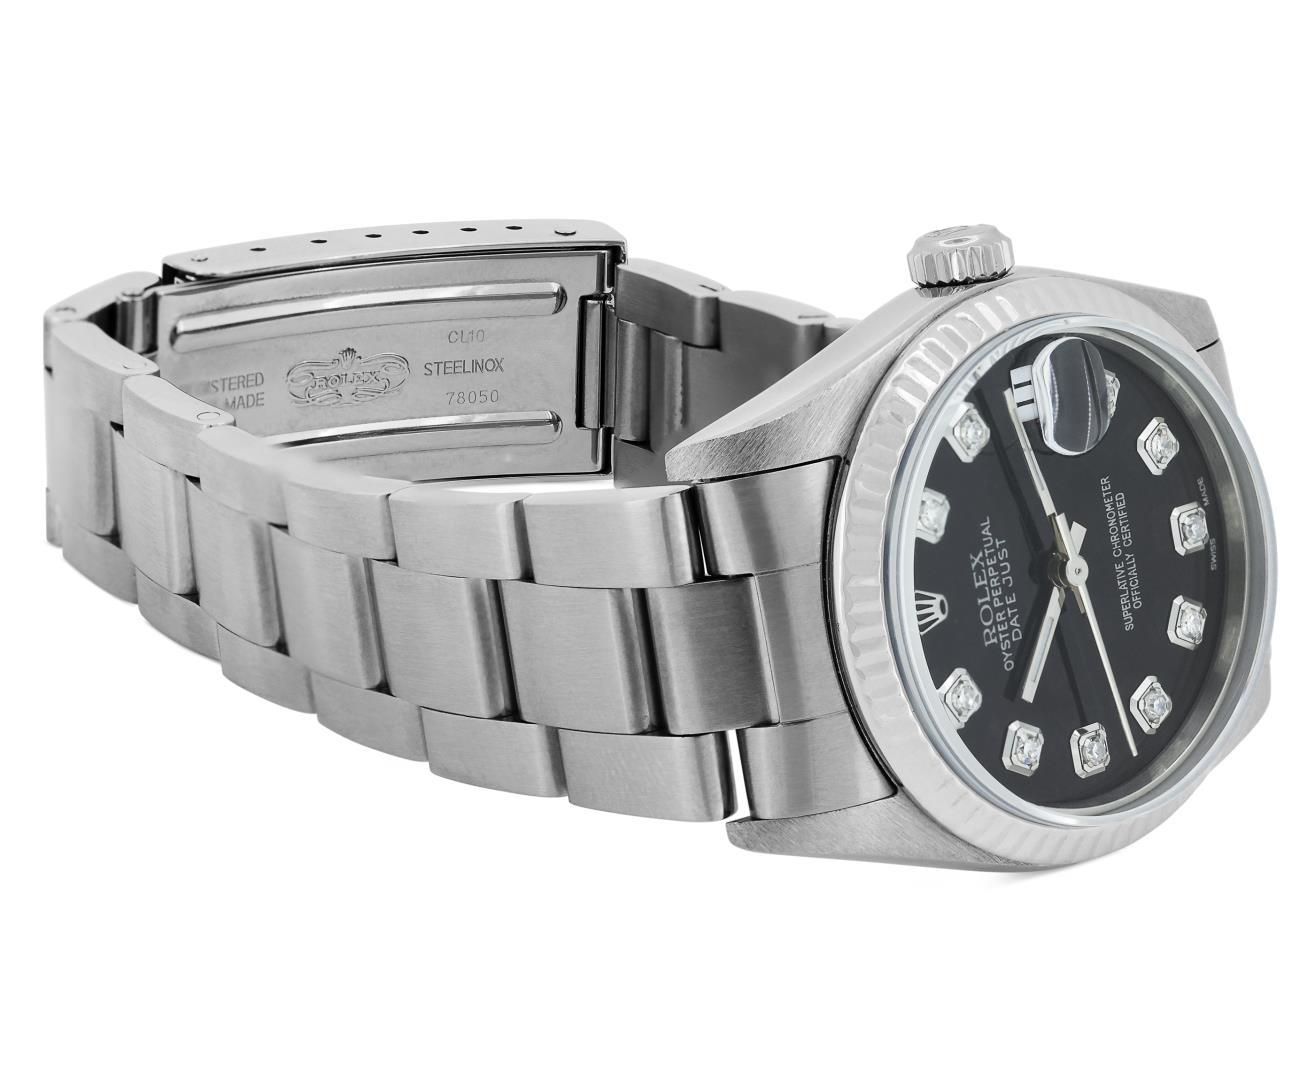 Rolex Midsize Stainless Steel Datejust Wristwatch With Rolex Box